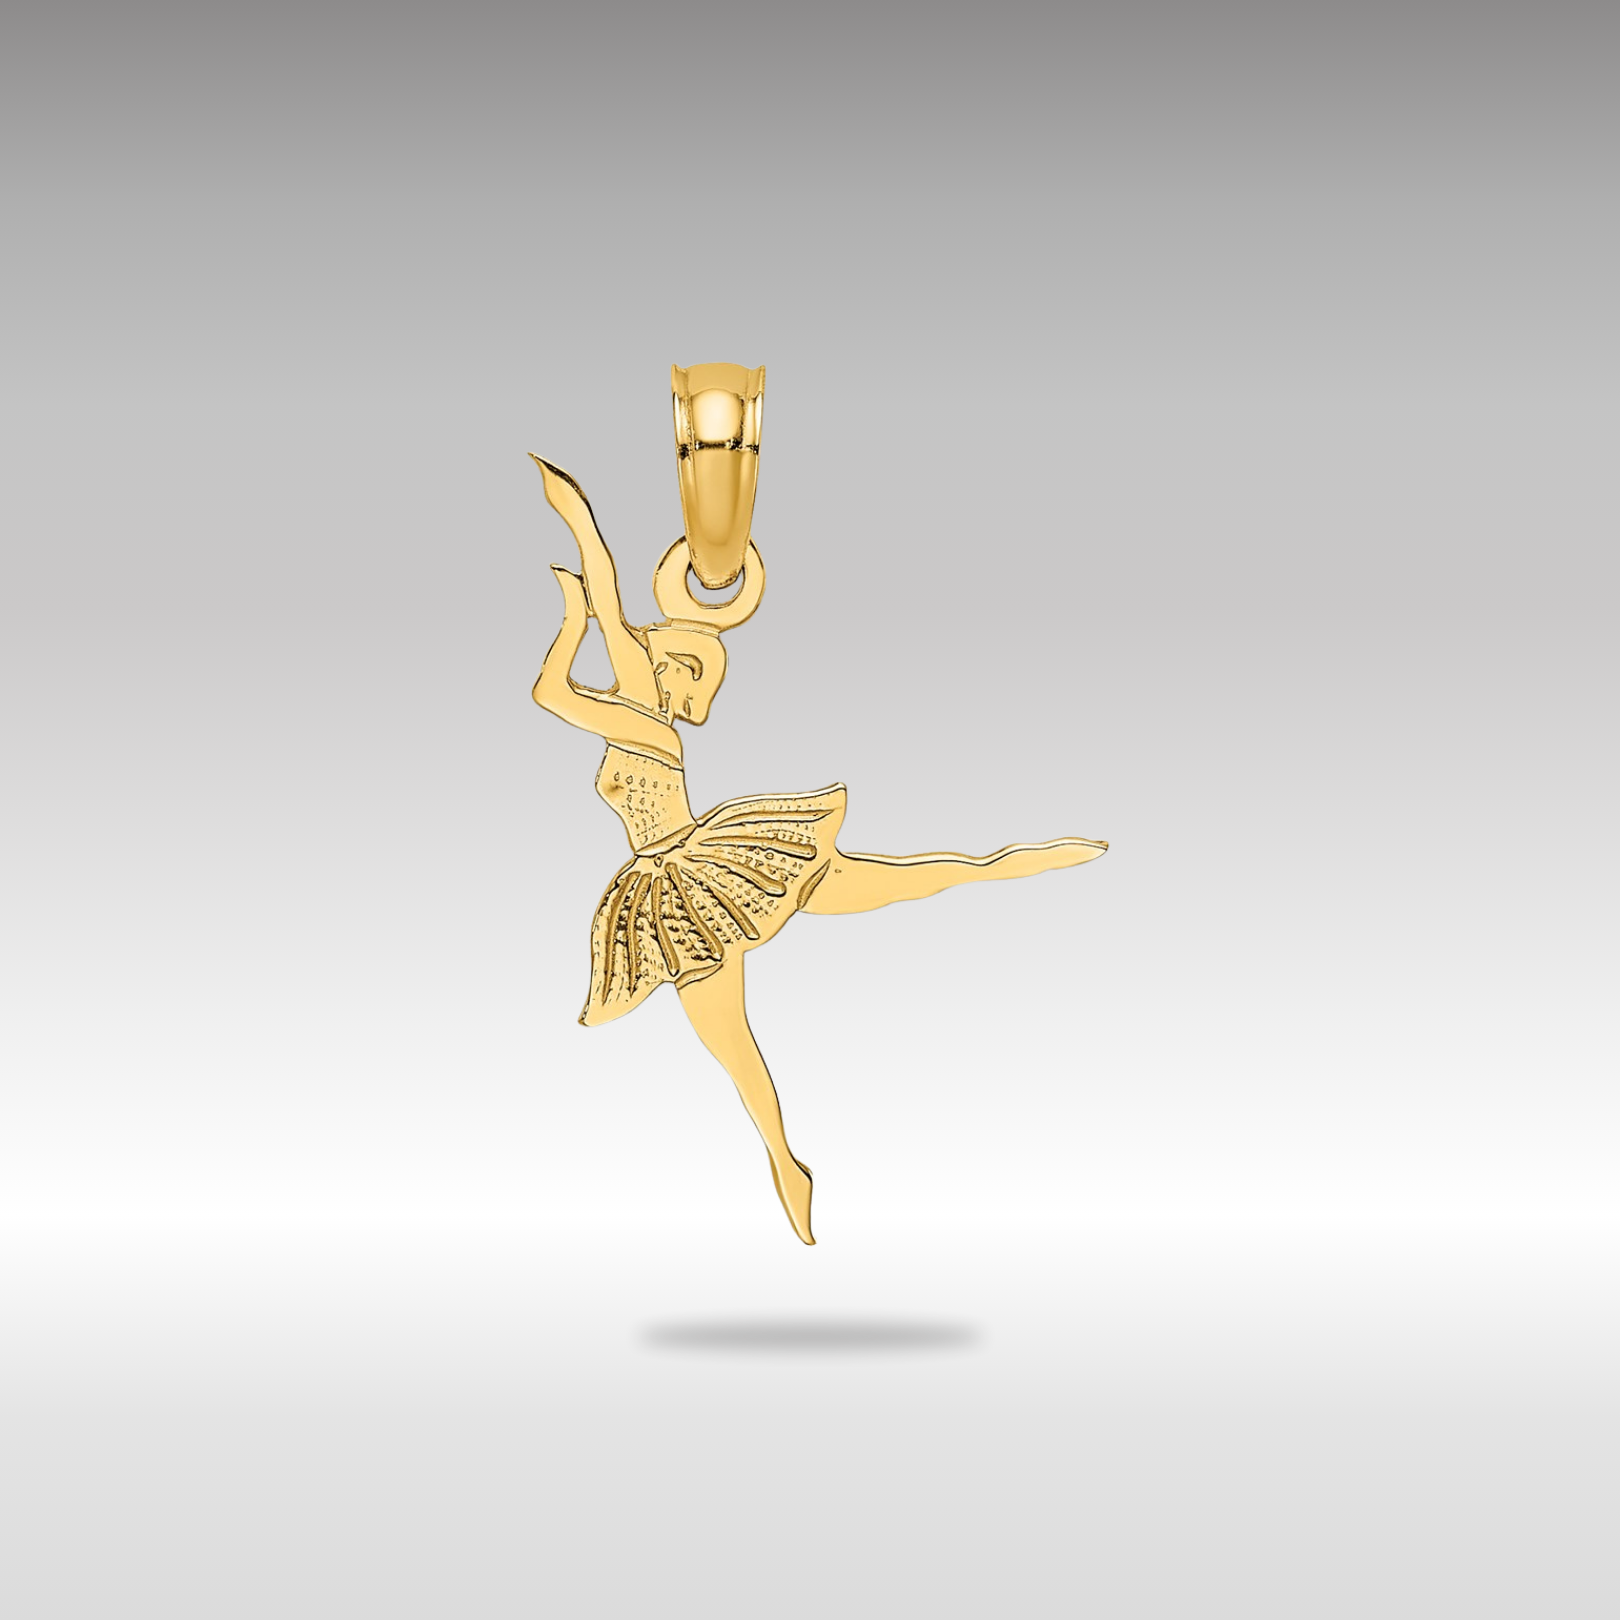 Gold Ballerina Pendant Model-C3130 - Charlie & Co. Jewelry